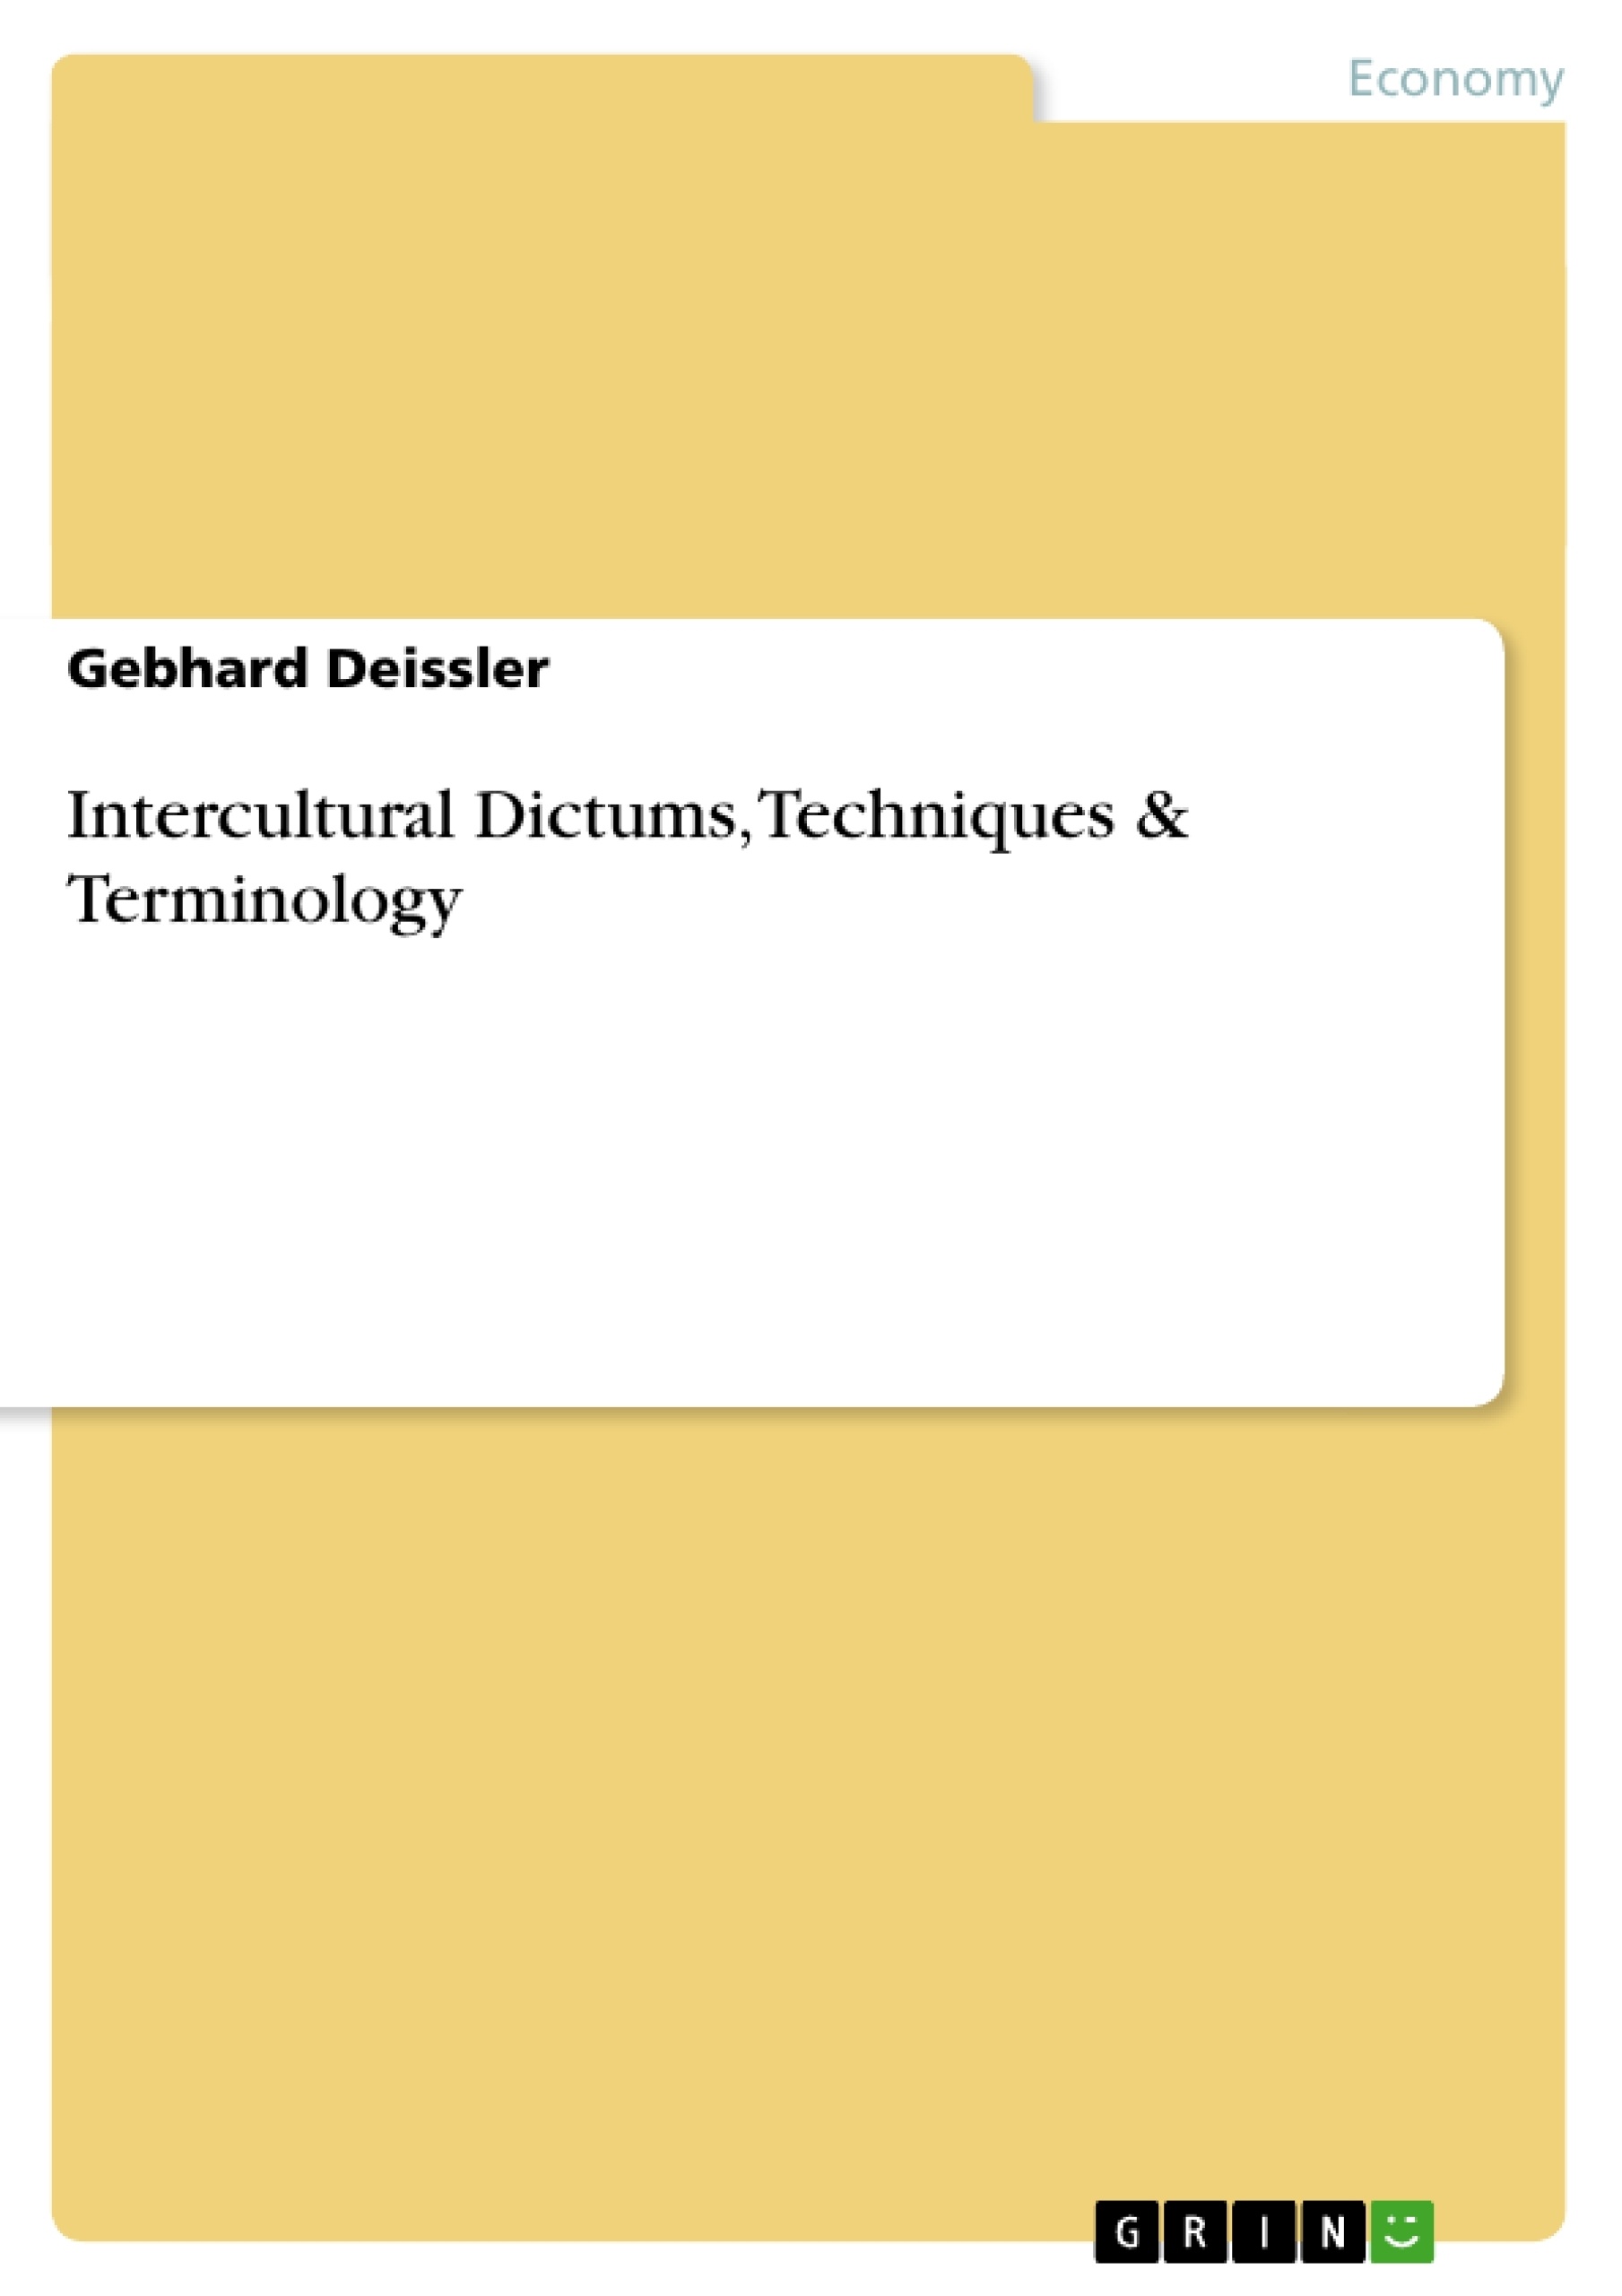 Title: Intercultural Dictums, Techniques & Terminology